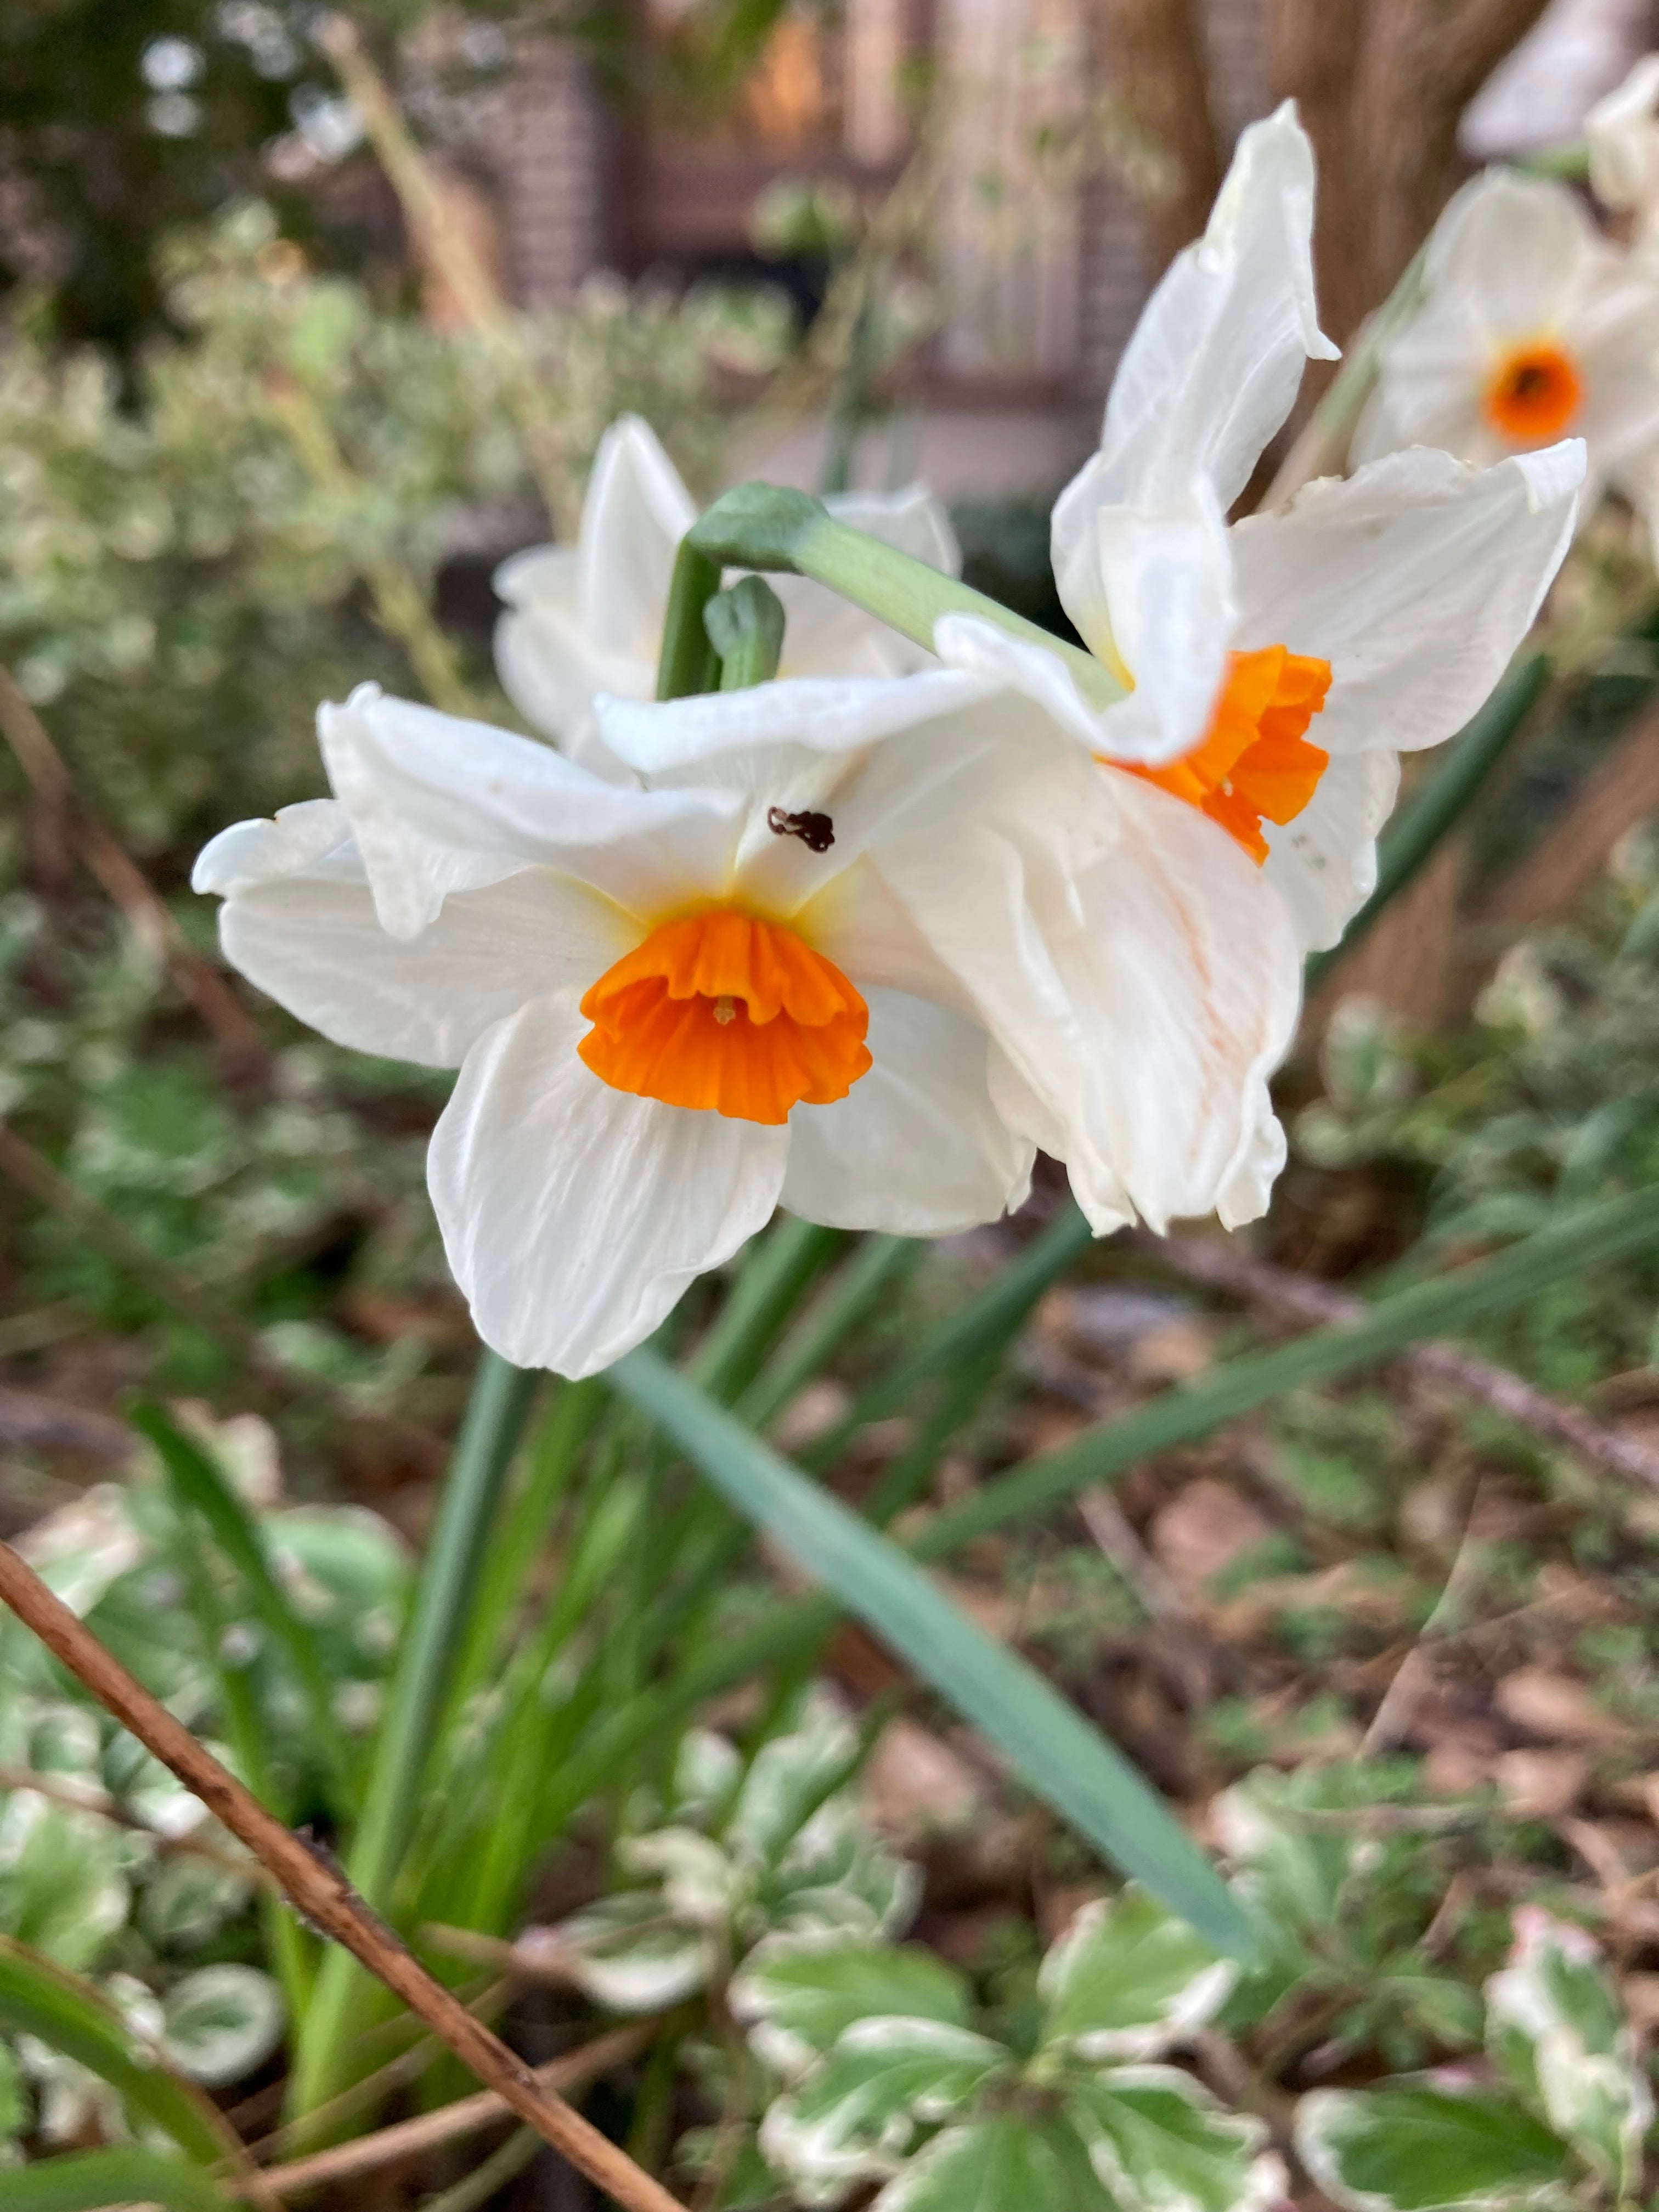 Geranium Daffodil Bulbs (Narcissus) Free UK Postage